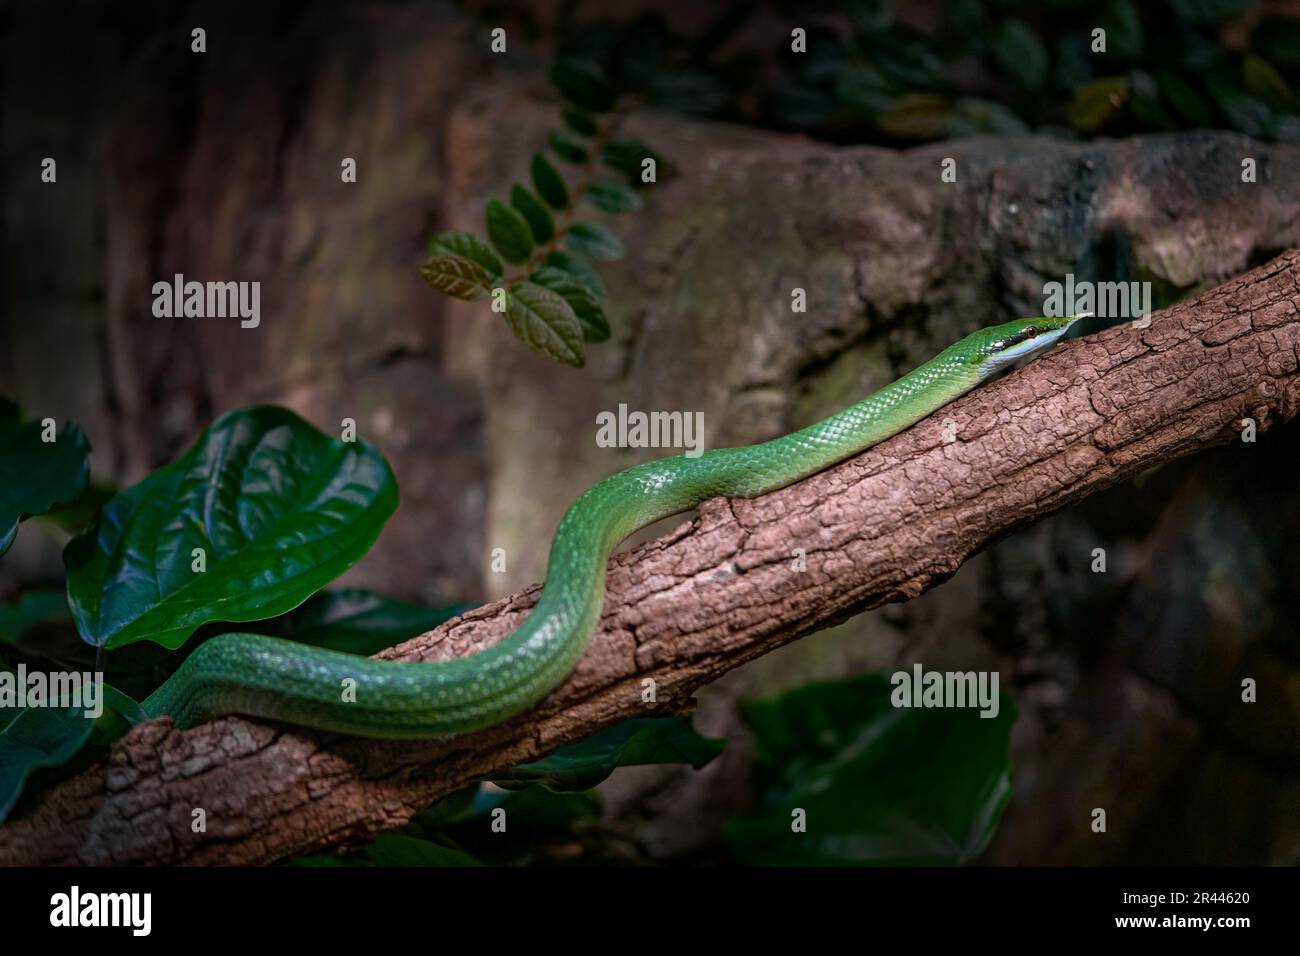 Rhino Rat snake, Gonyosoma boulengeri, viper from Vietnam and China. Green snake in the vegetation. Asia wildlife. Stock Photo